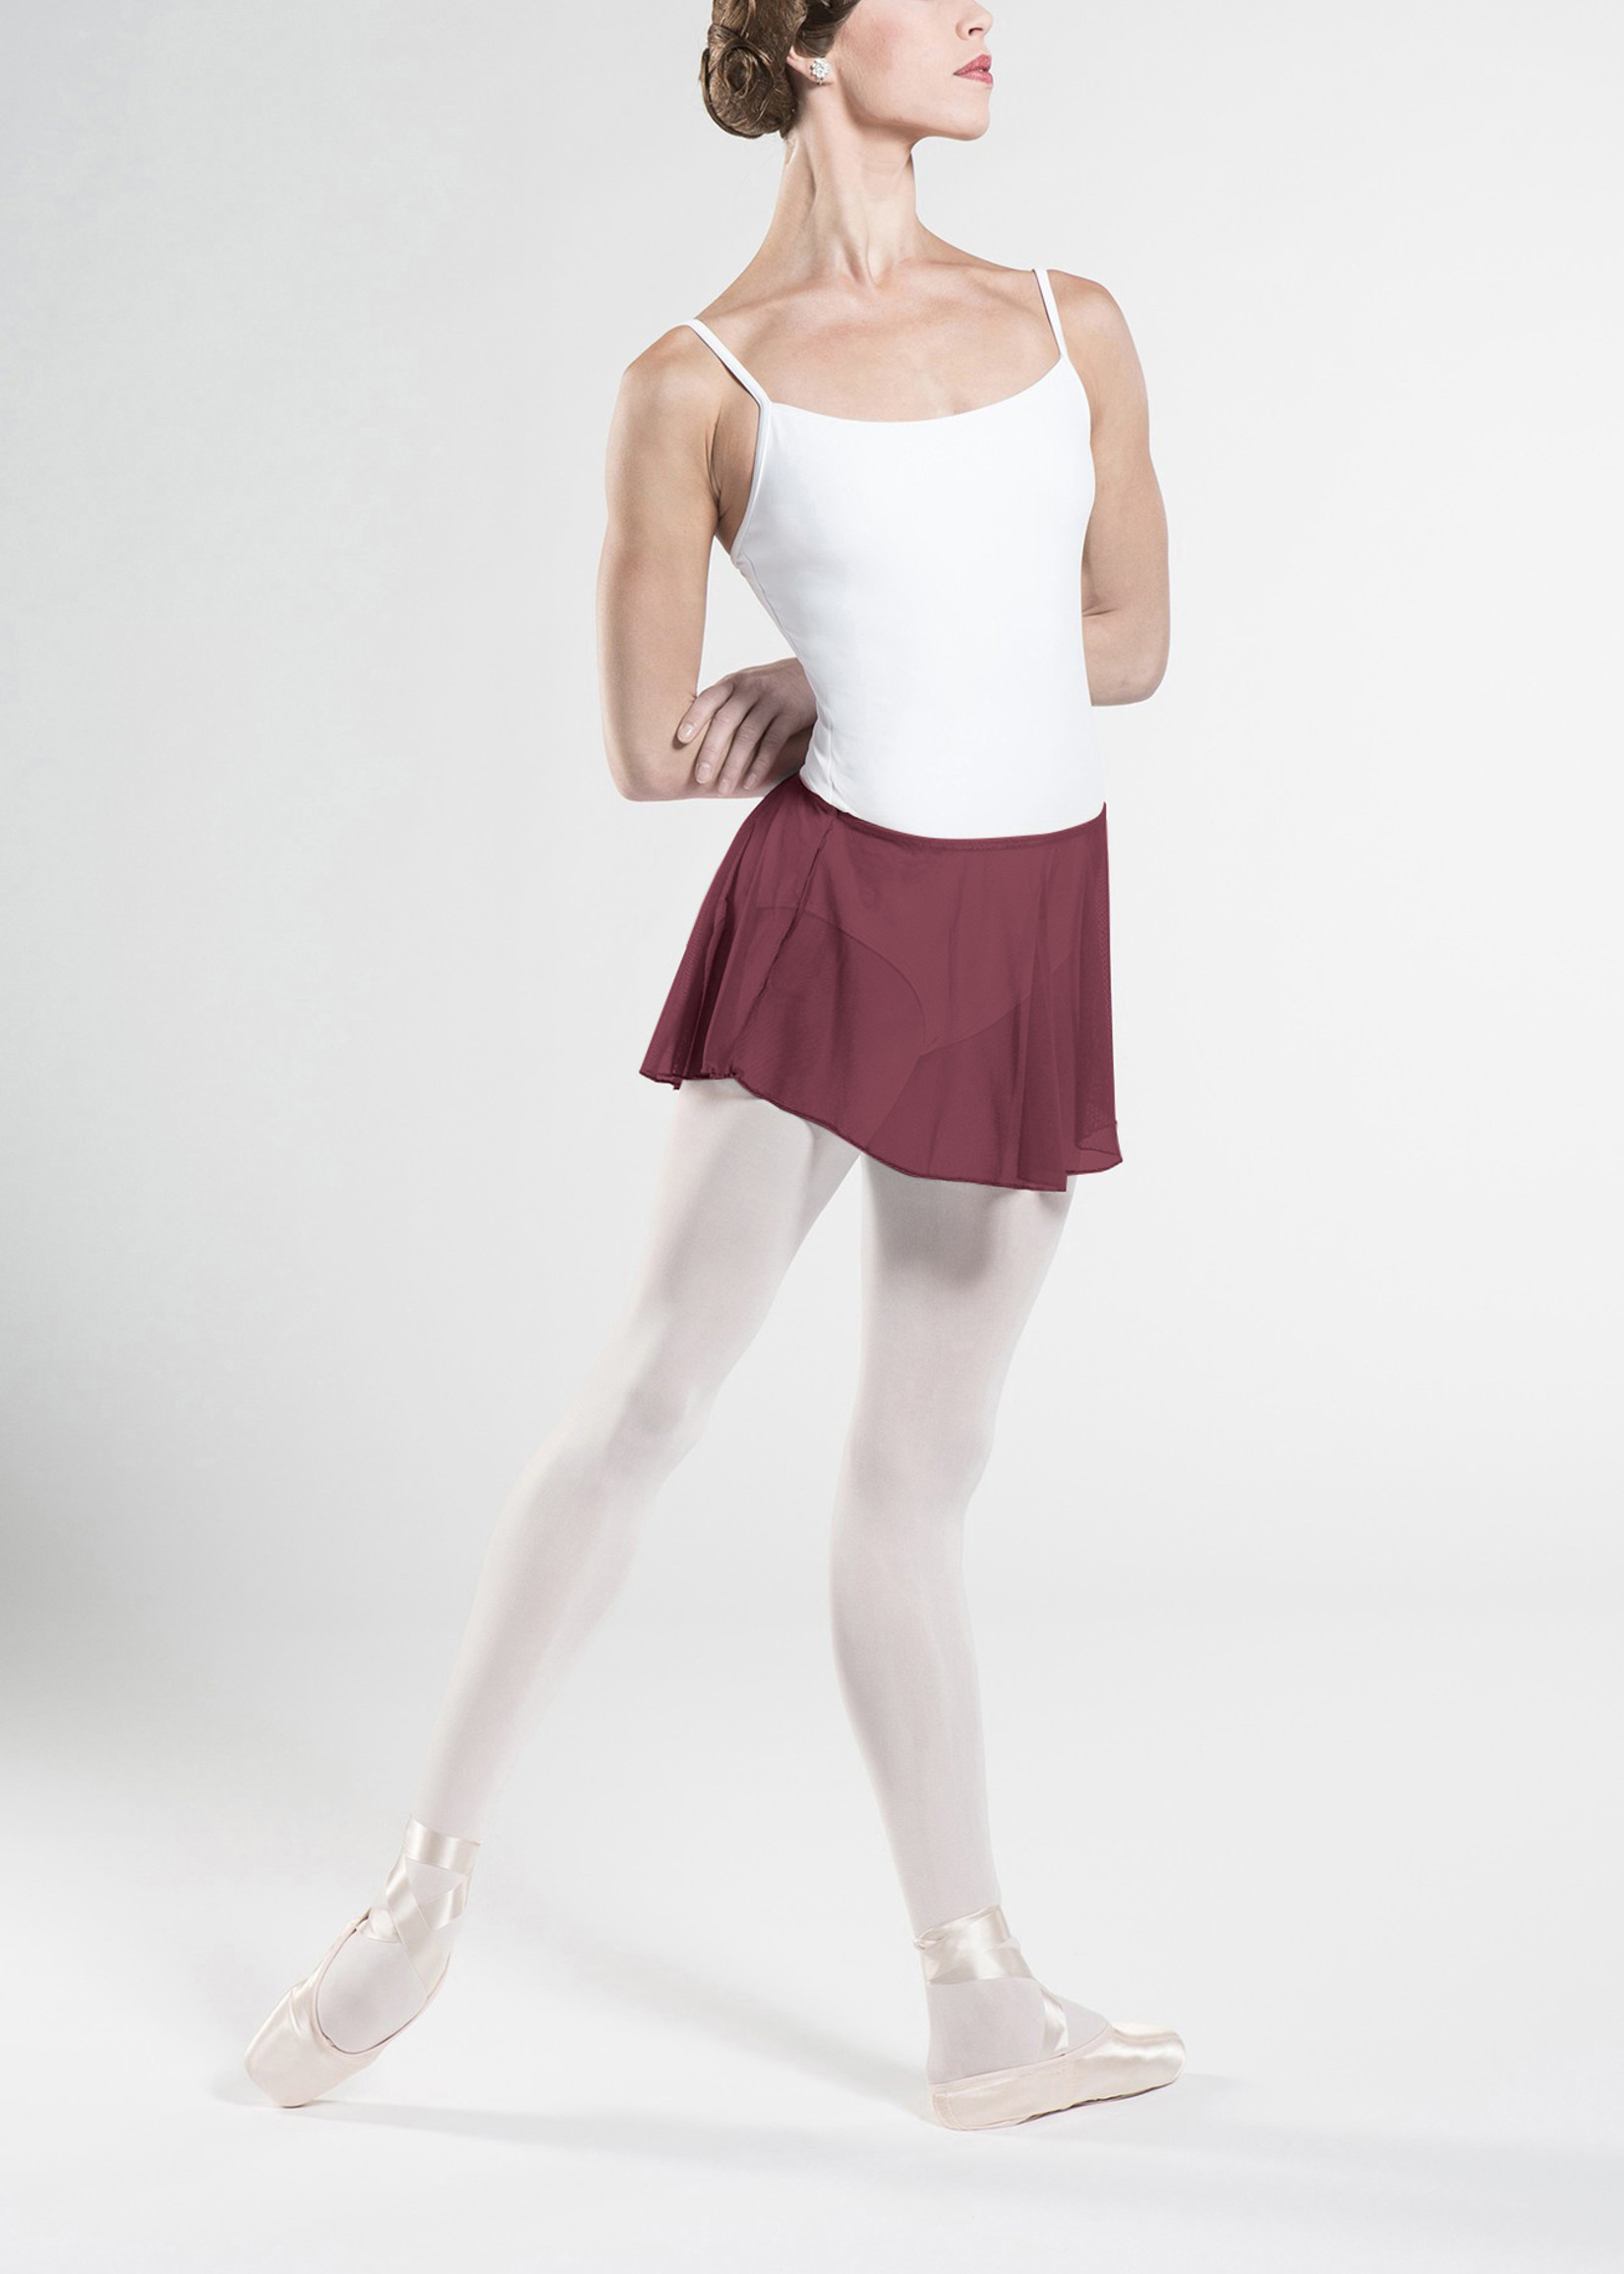 Wear Moi Adult Daphne Skirt - The DanceWEAR Shoppe